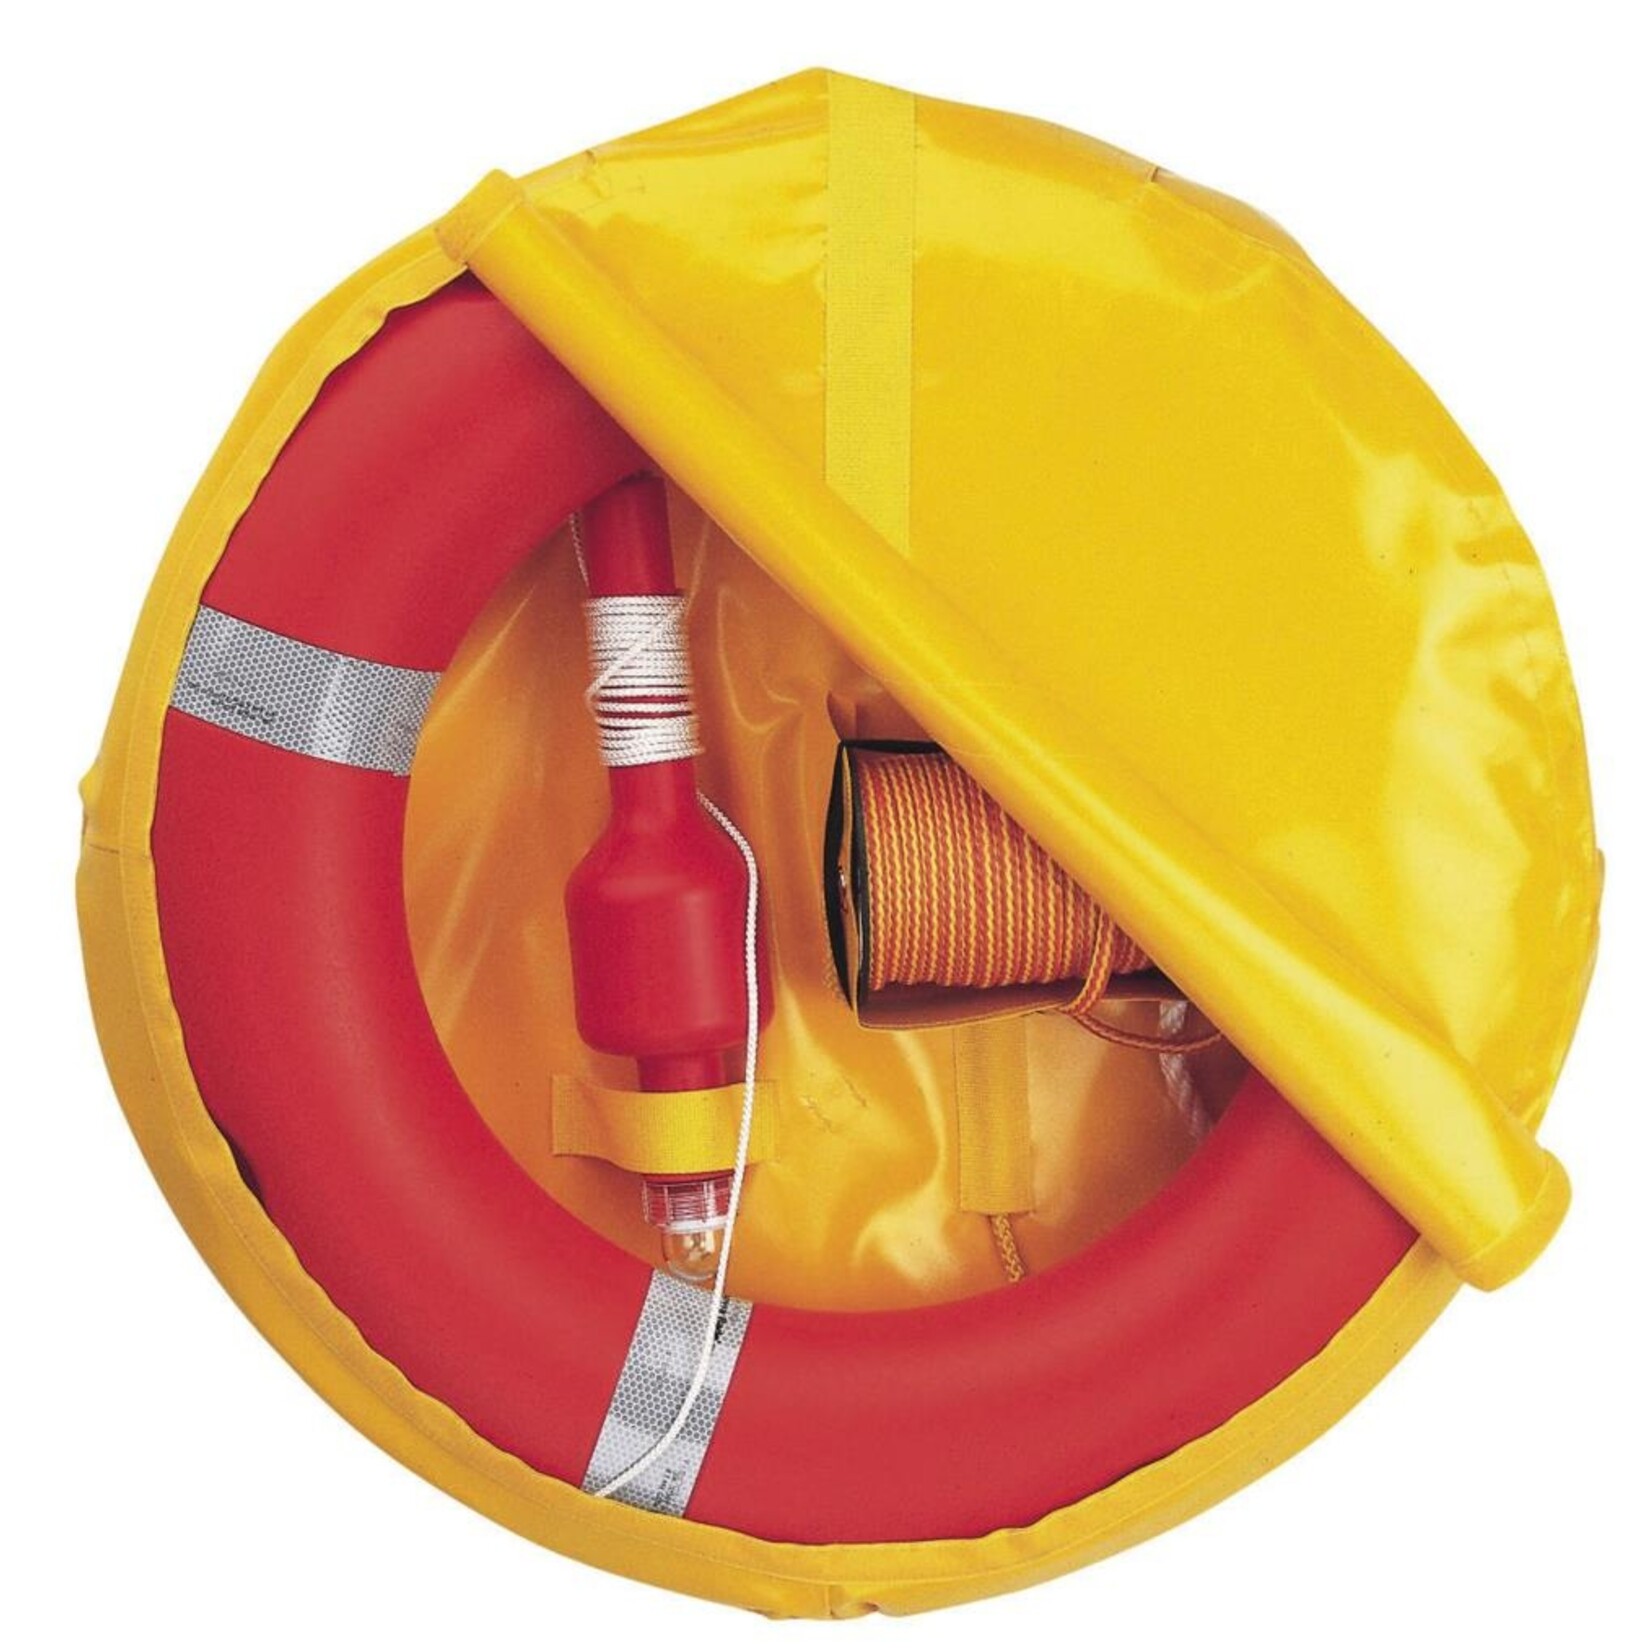 Plastimo Rescue ring buoy yellow